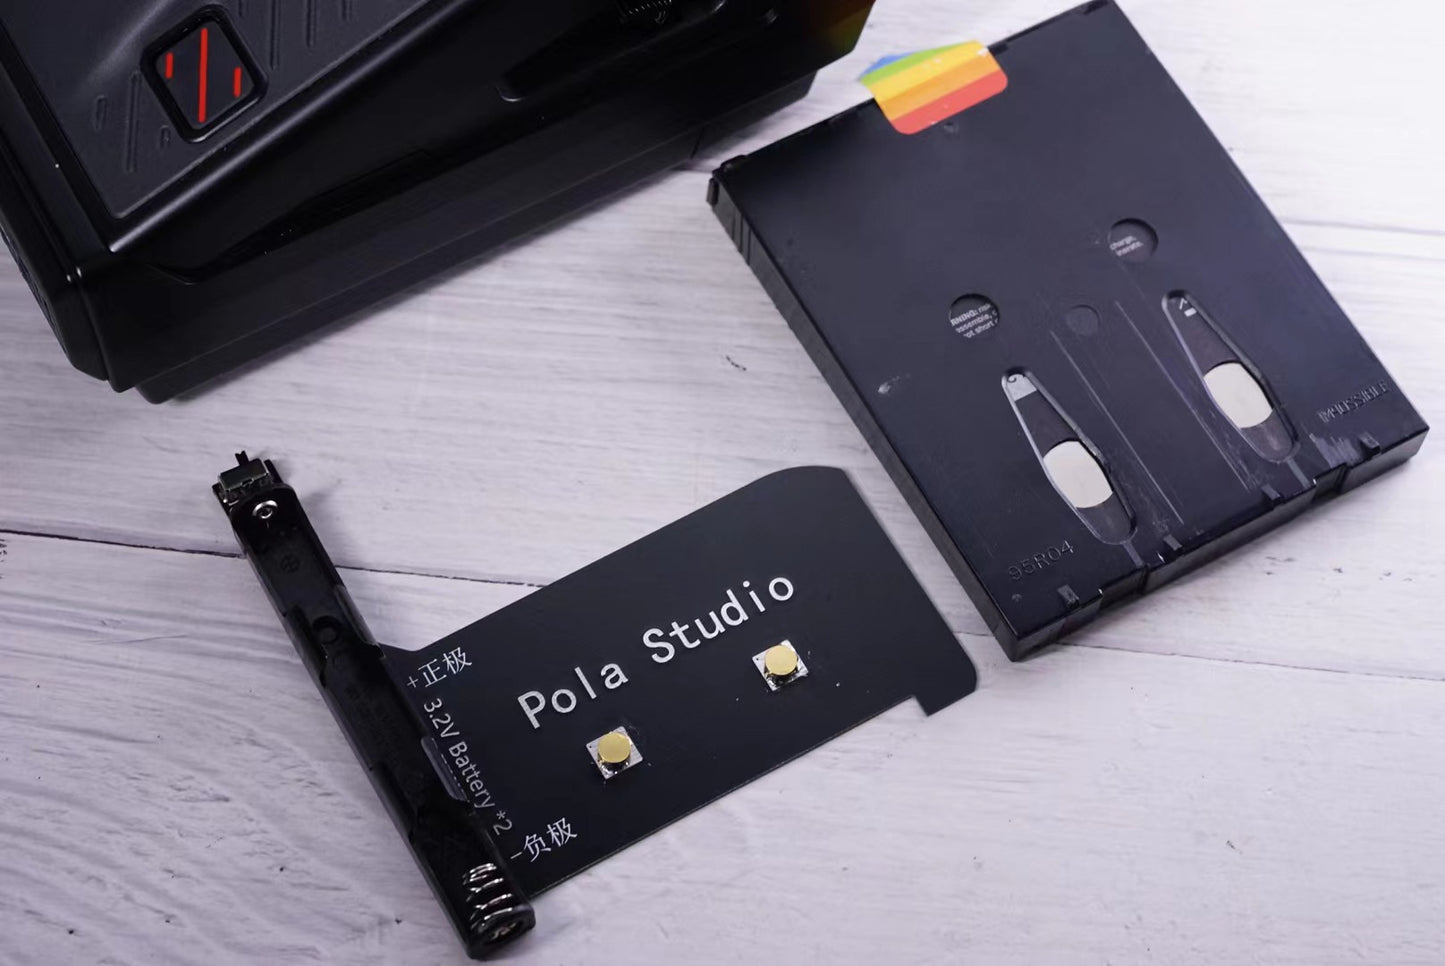 PolaStudio*Polaroid itype/600 film to spectra camera adapter